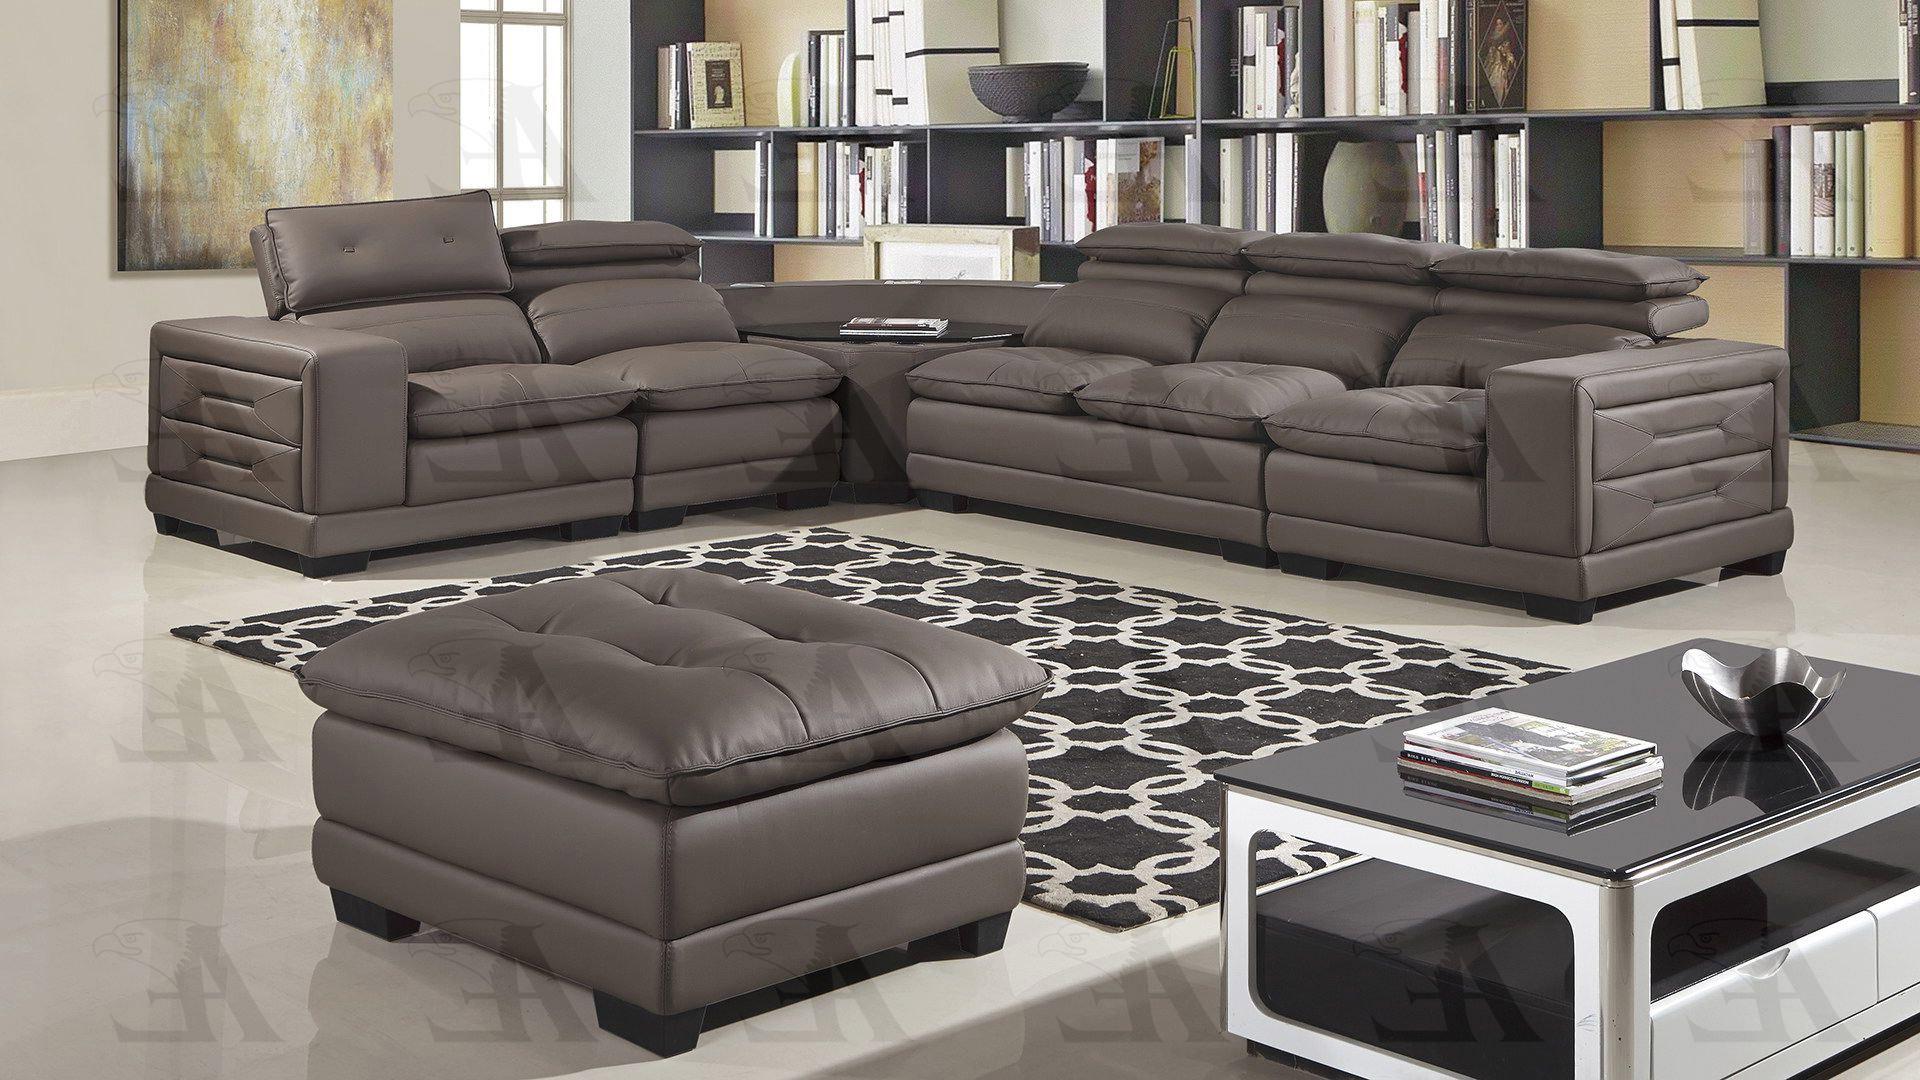 

    
American Eagle Furniture AE-L688M-TPE Sectional Sofa Set Gray AE-L688M-TPE
